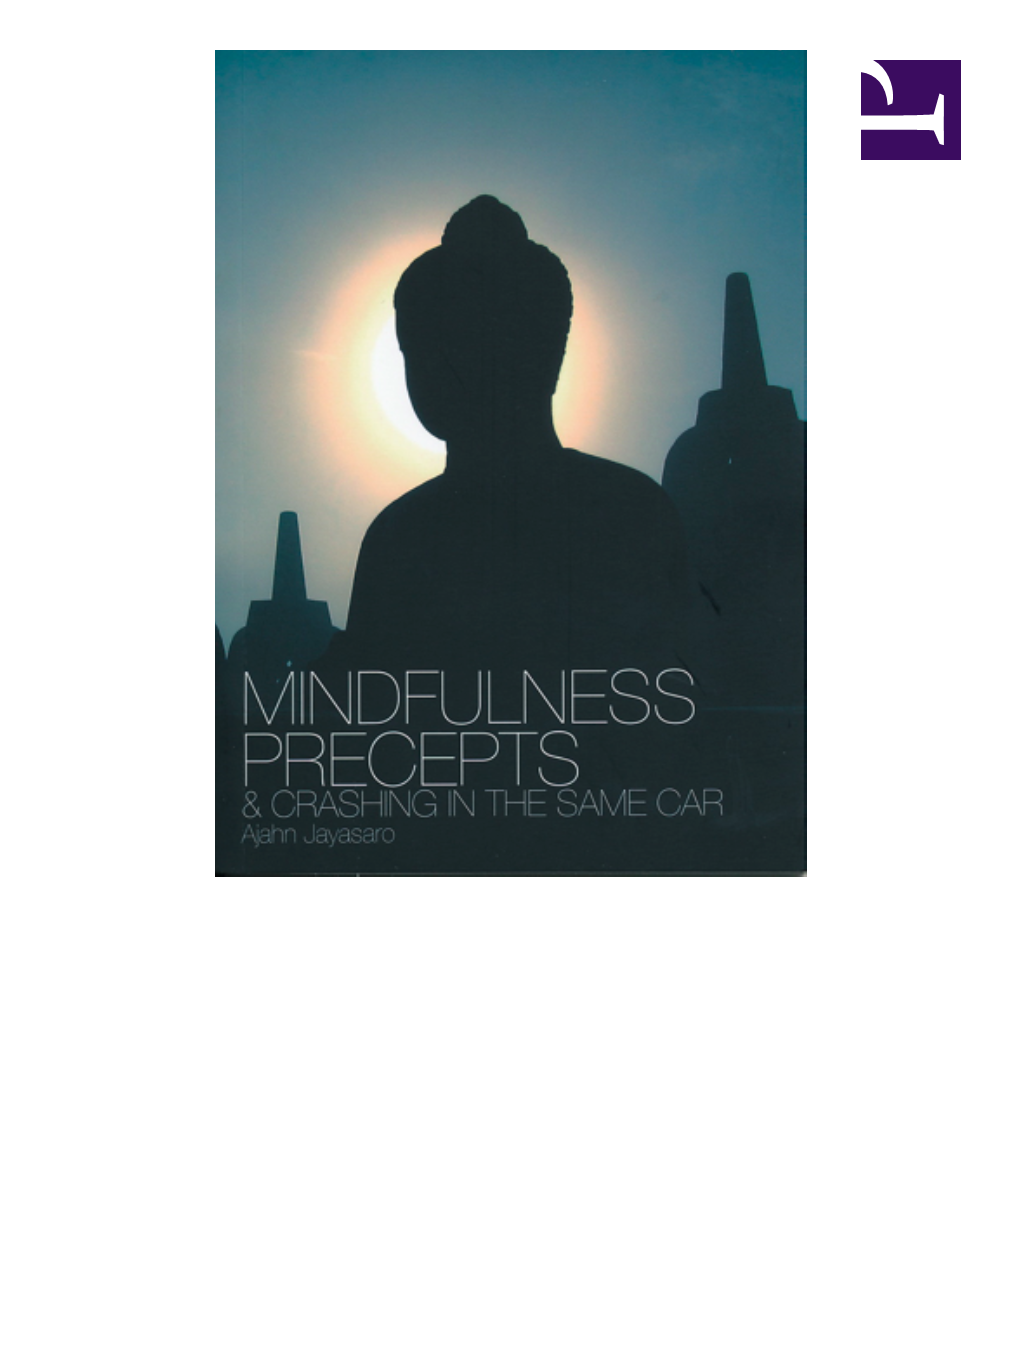 Mindfulness Precepts & Crashing in the Same